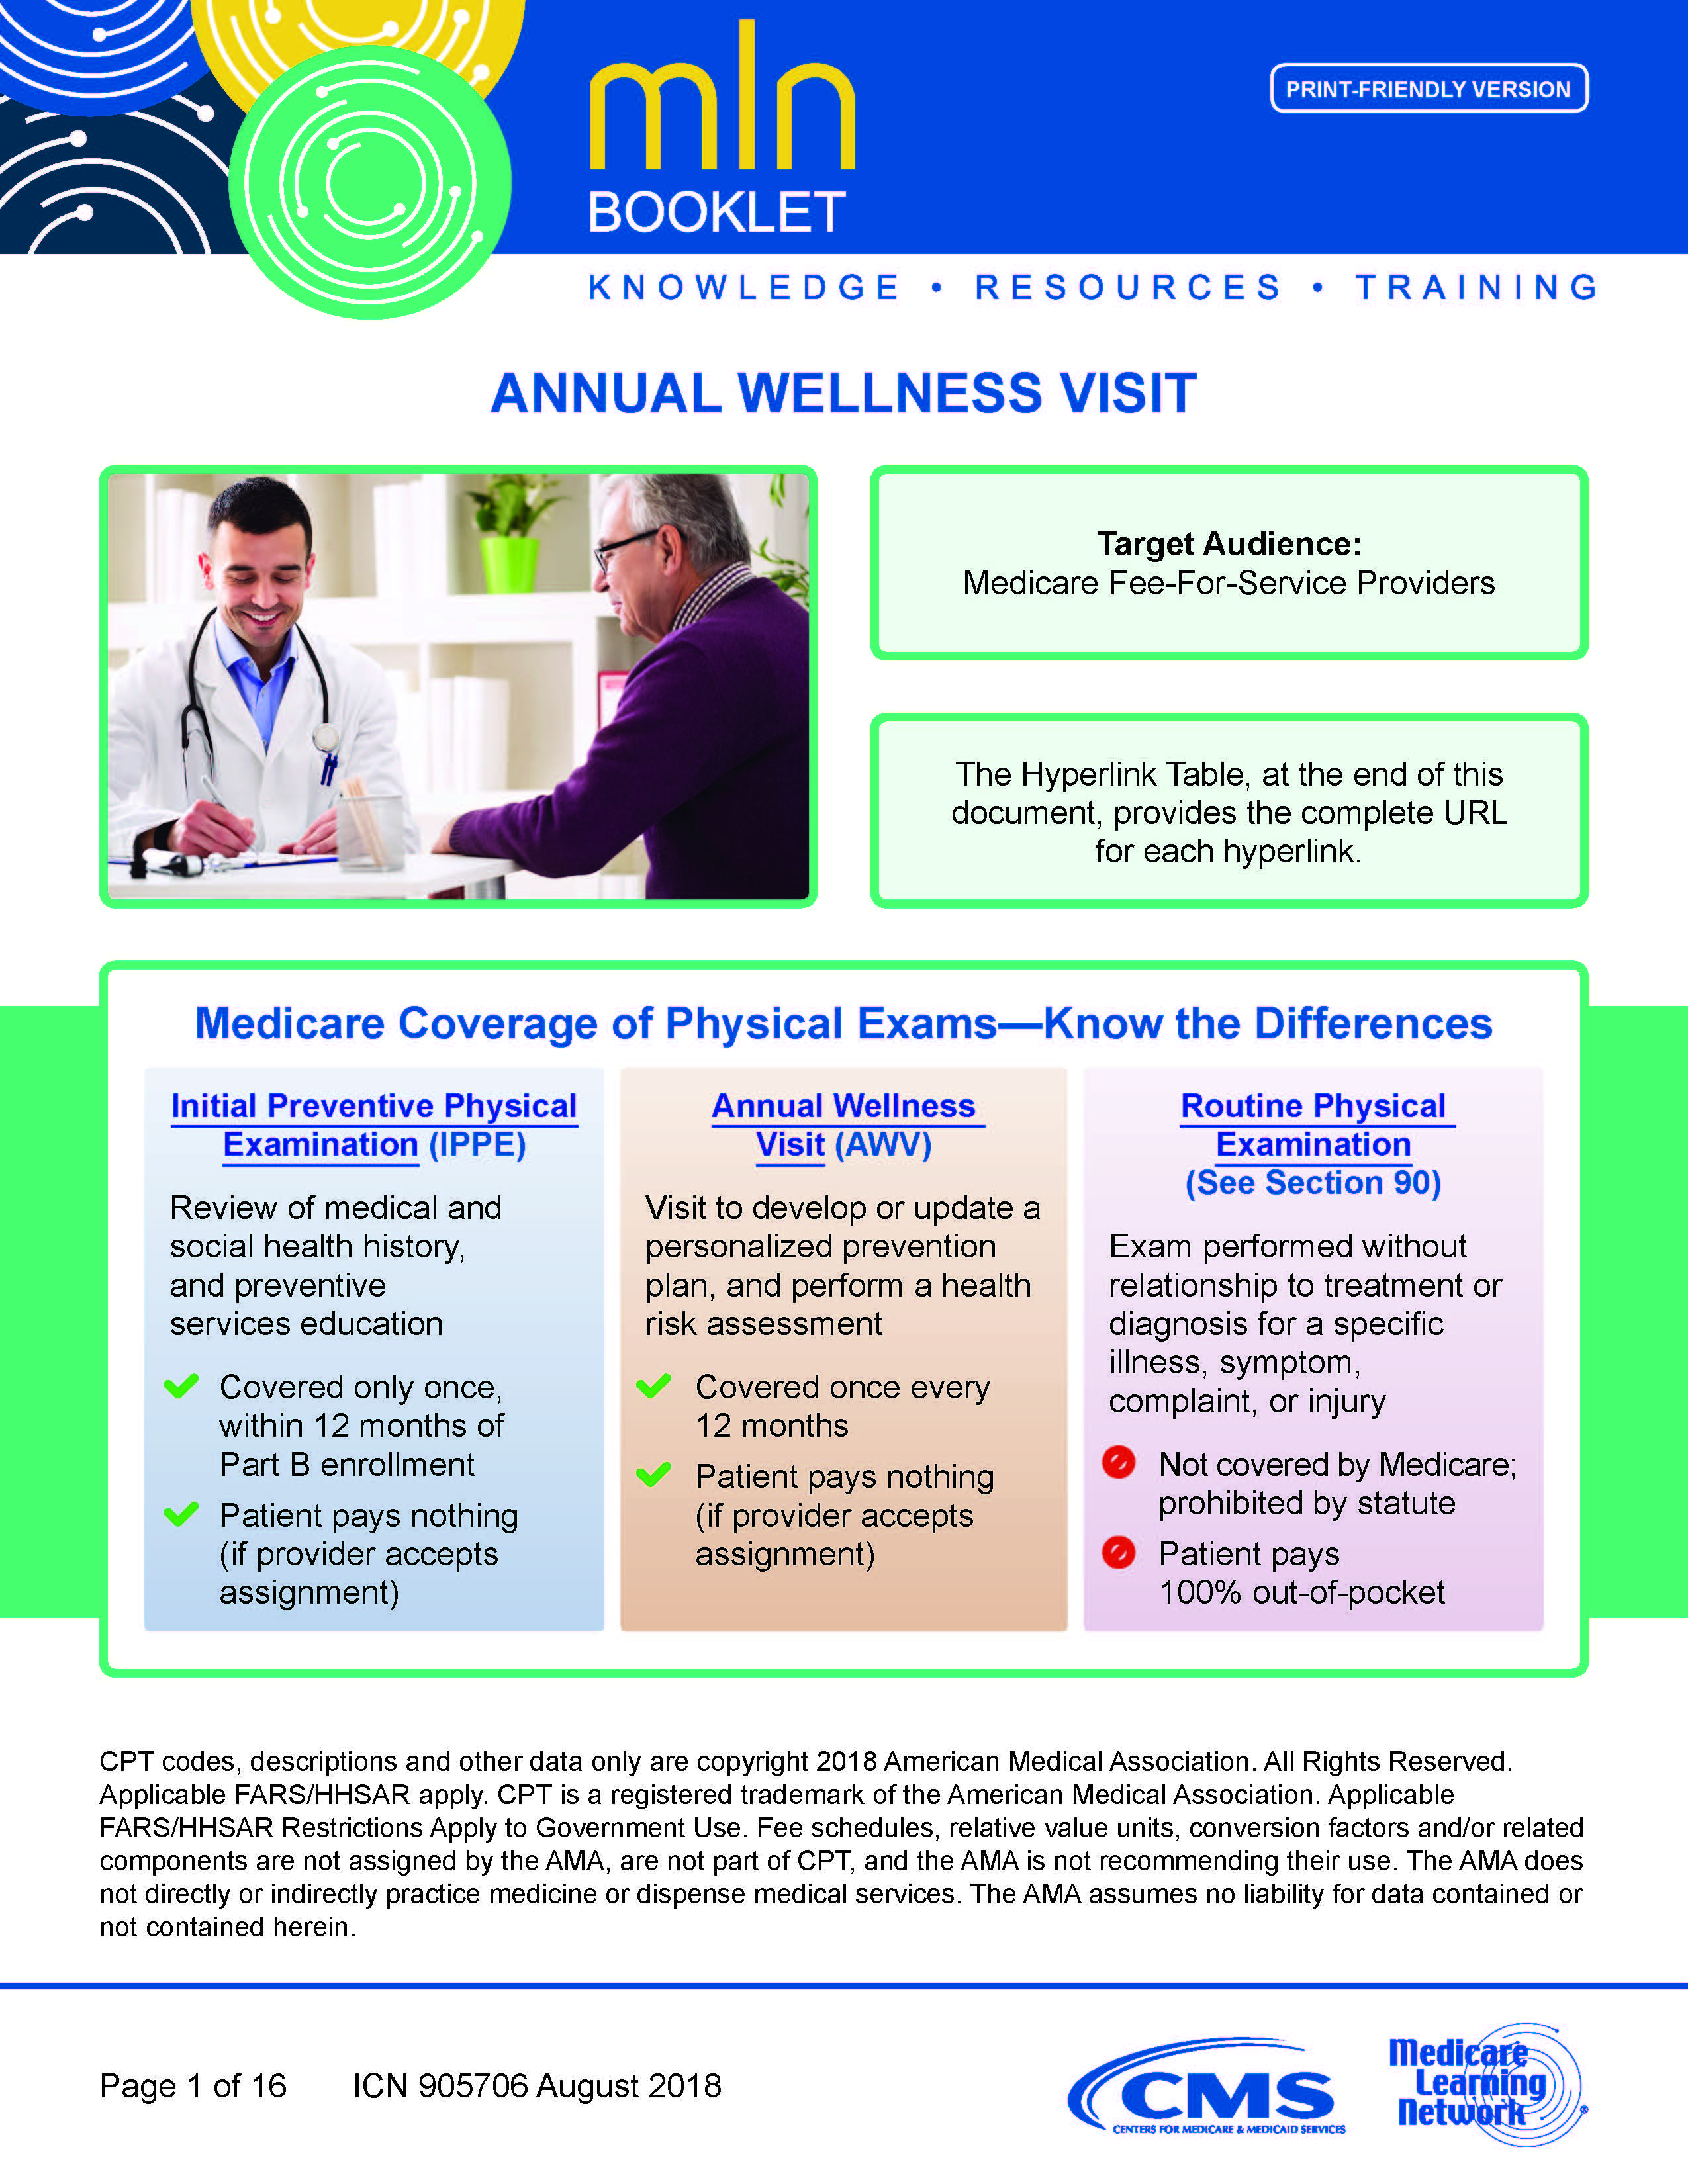 Annual Wellness Visit